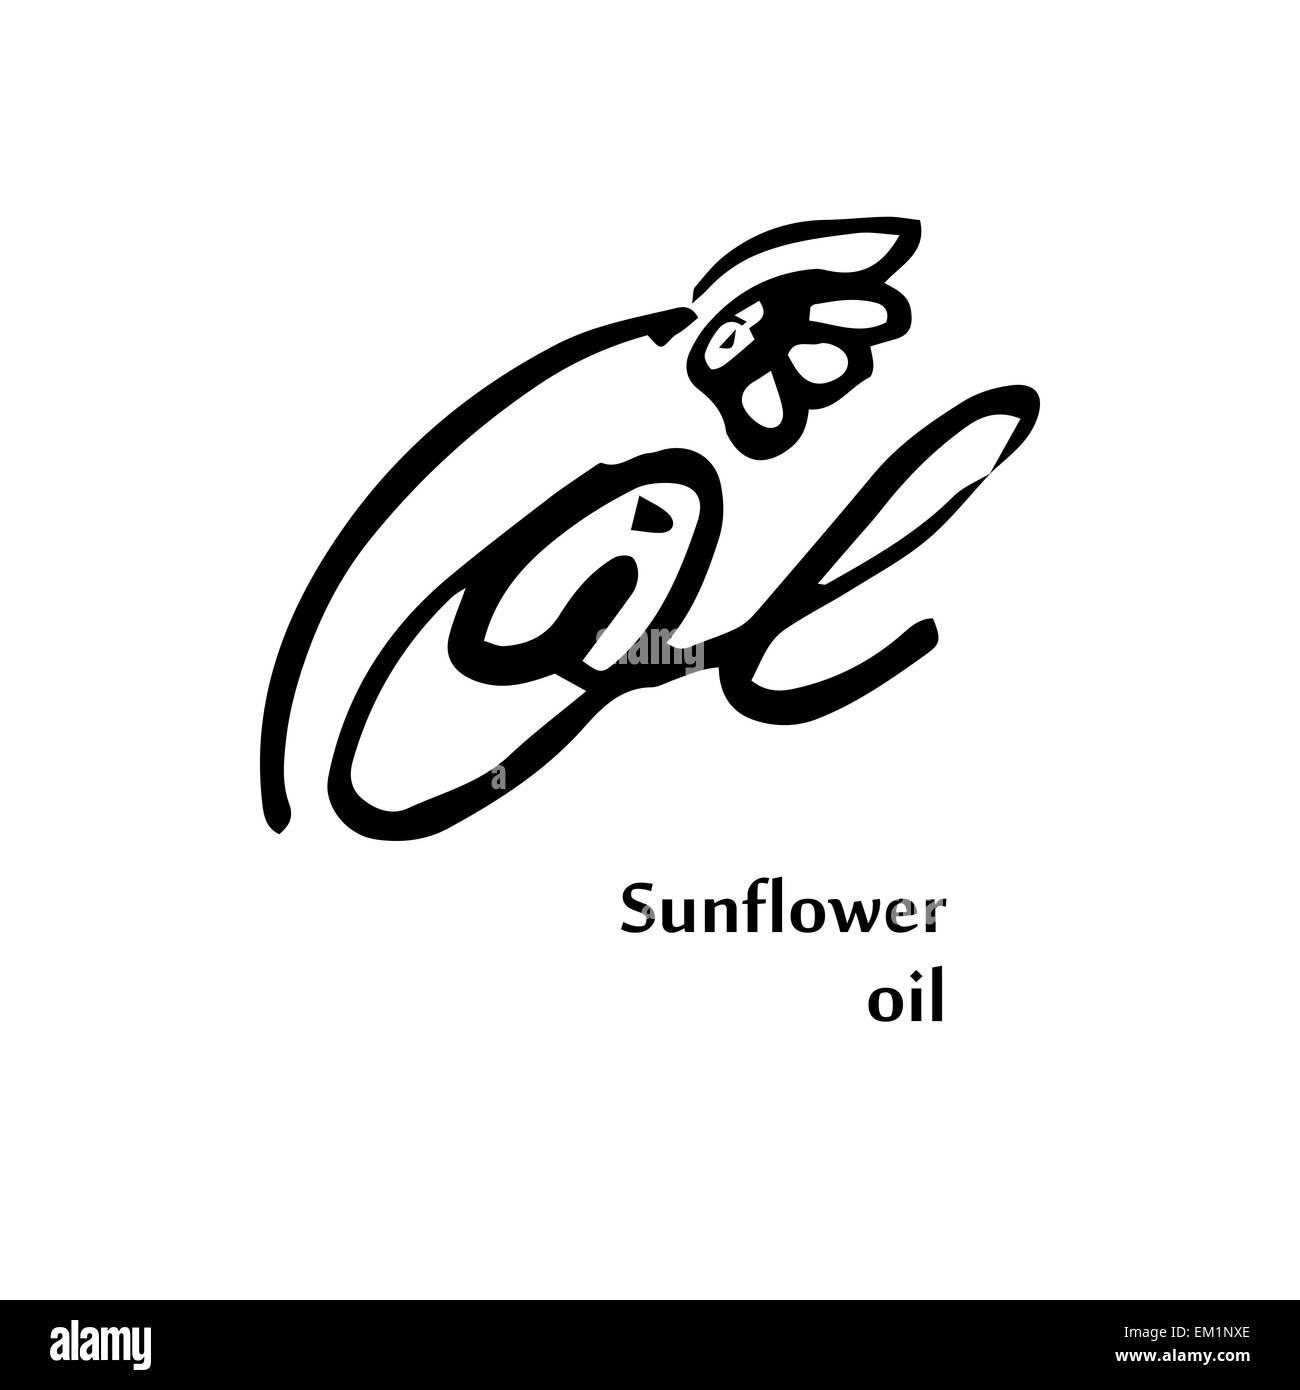 Design element sunflower oil for your ideas Stock Photo